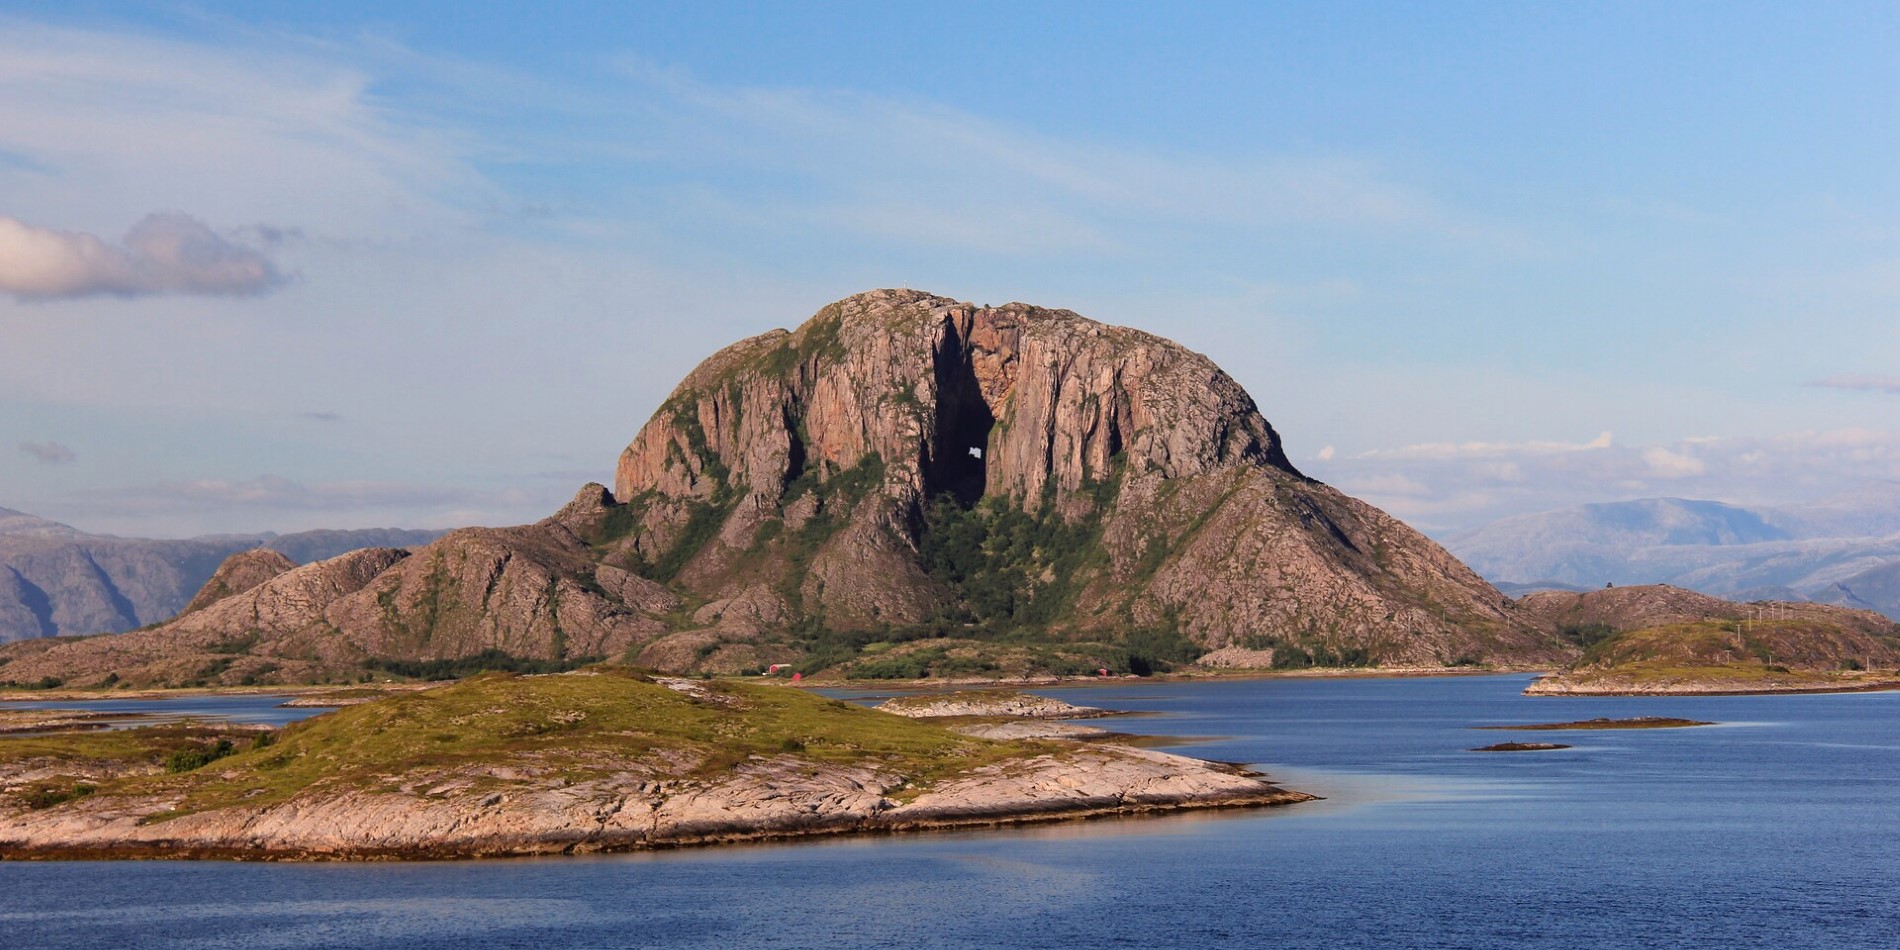 The iconic Torghatten mountain in Brønnøysund, Norway